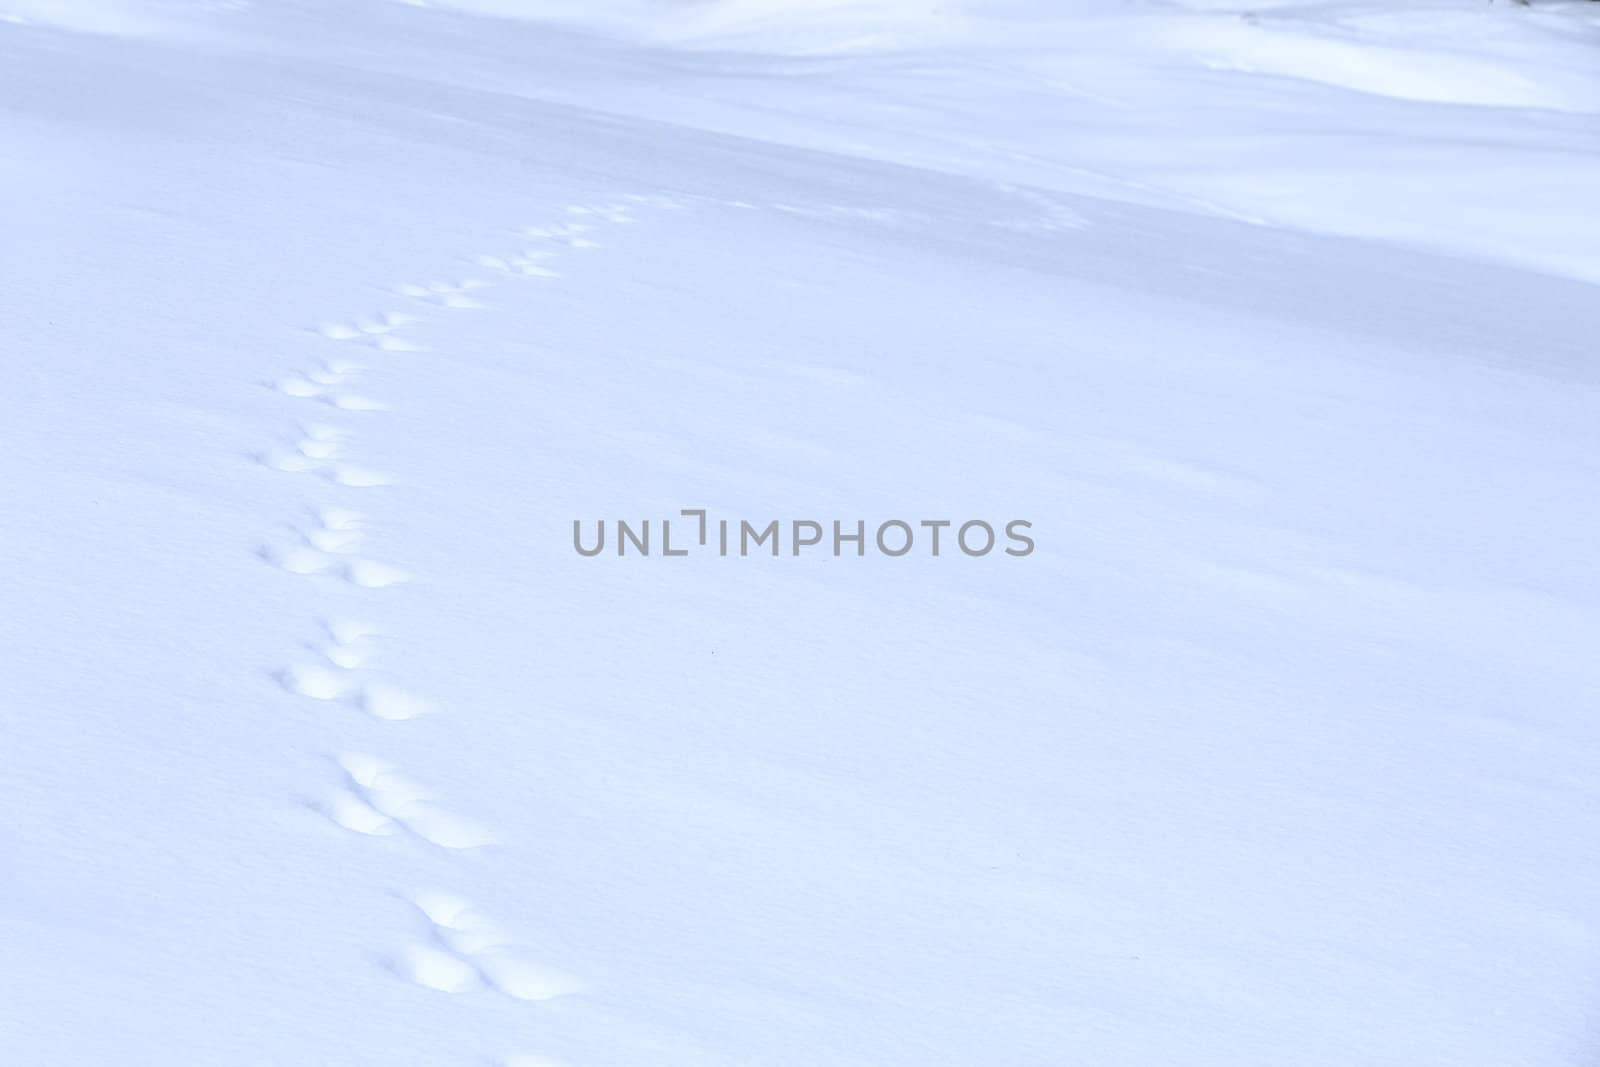 animal traces on snow by destillat